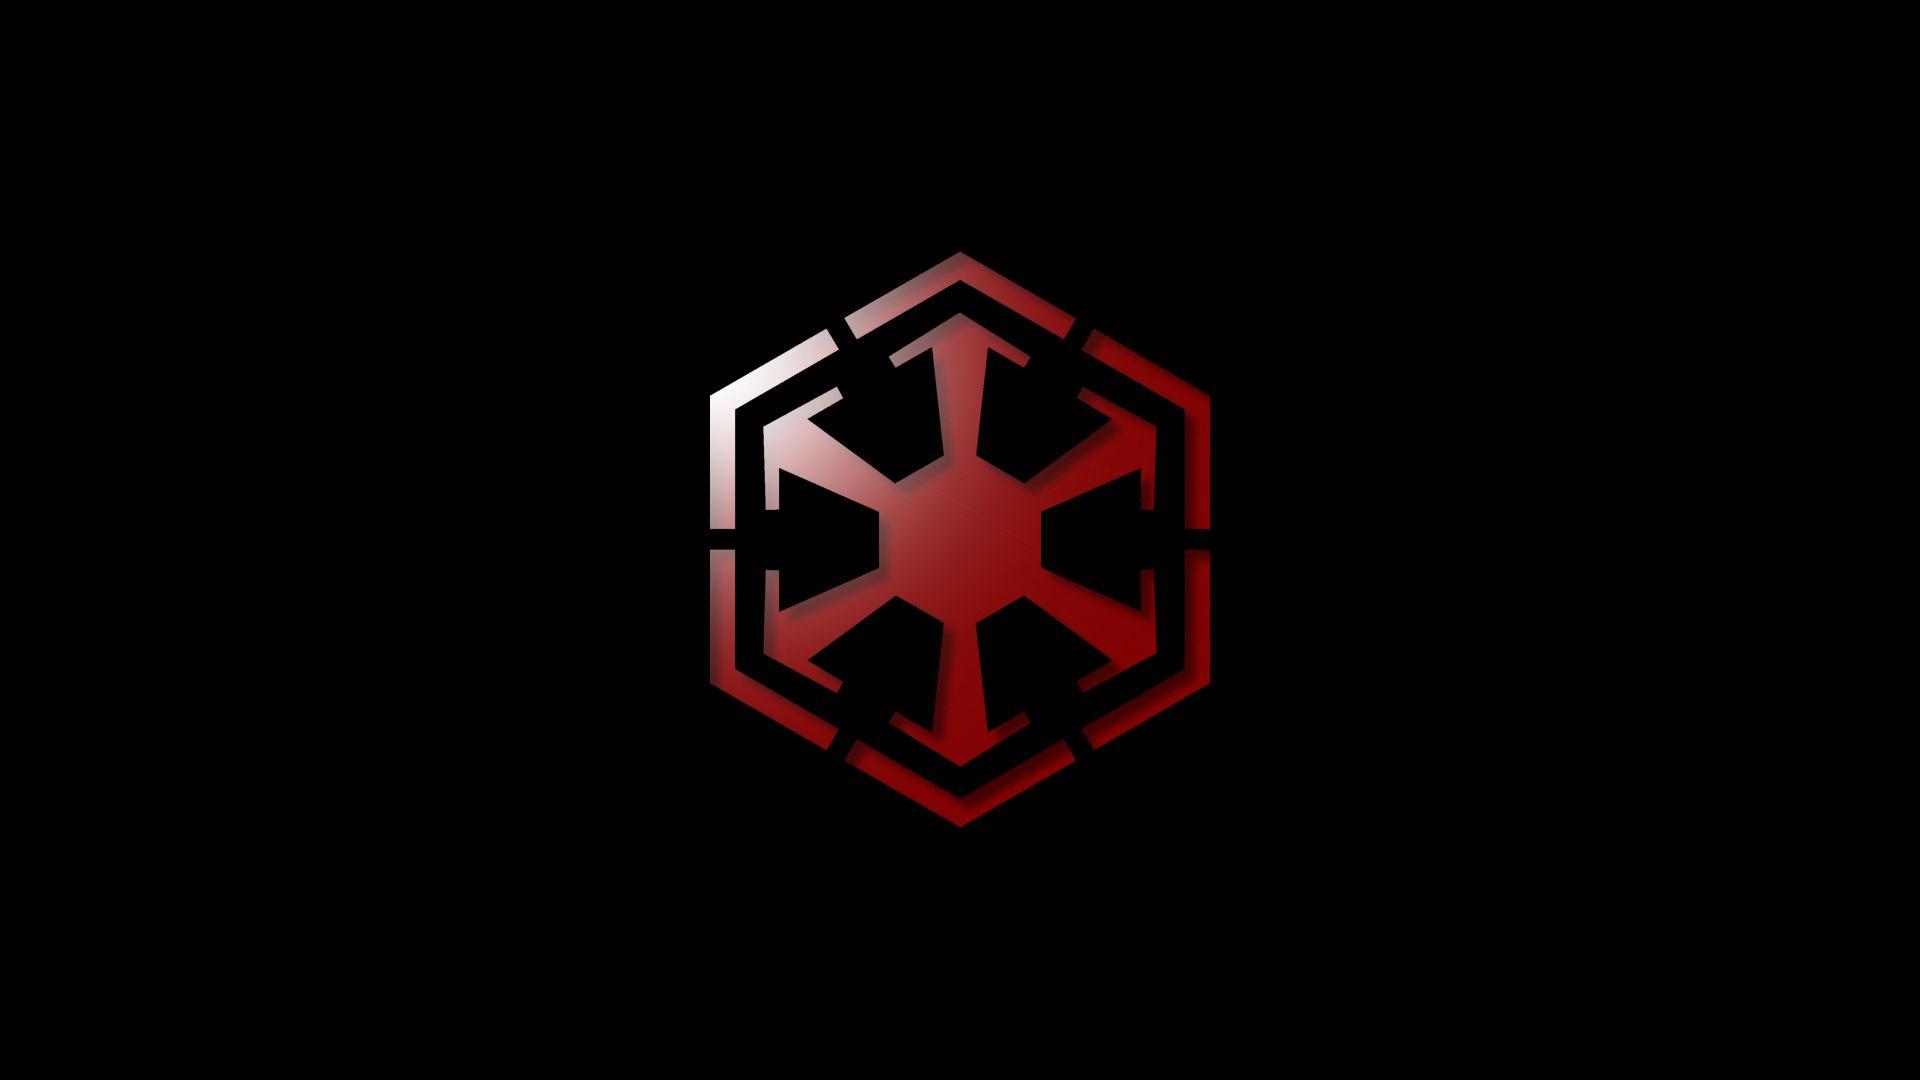 Sith Logo - 48+] Sith Emblem Wallpaper on WallpaperSafari